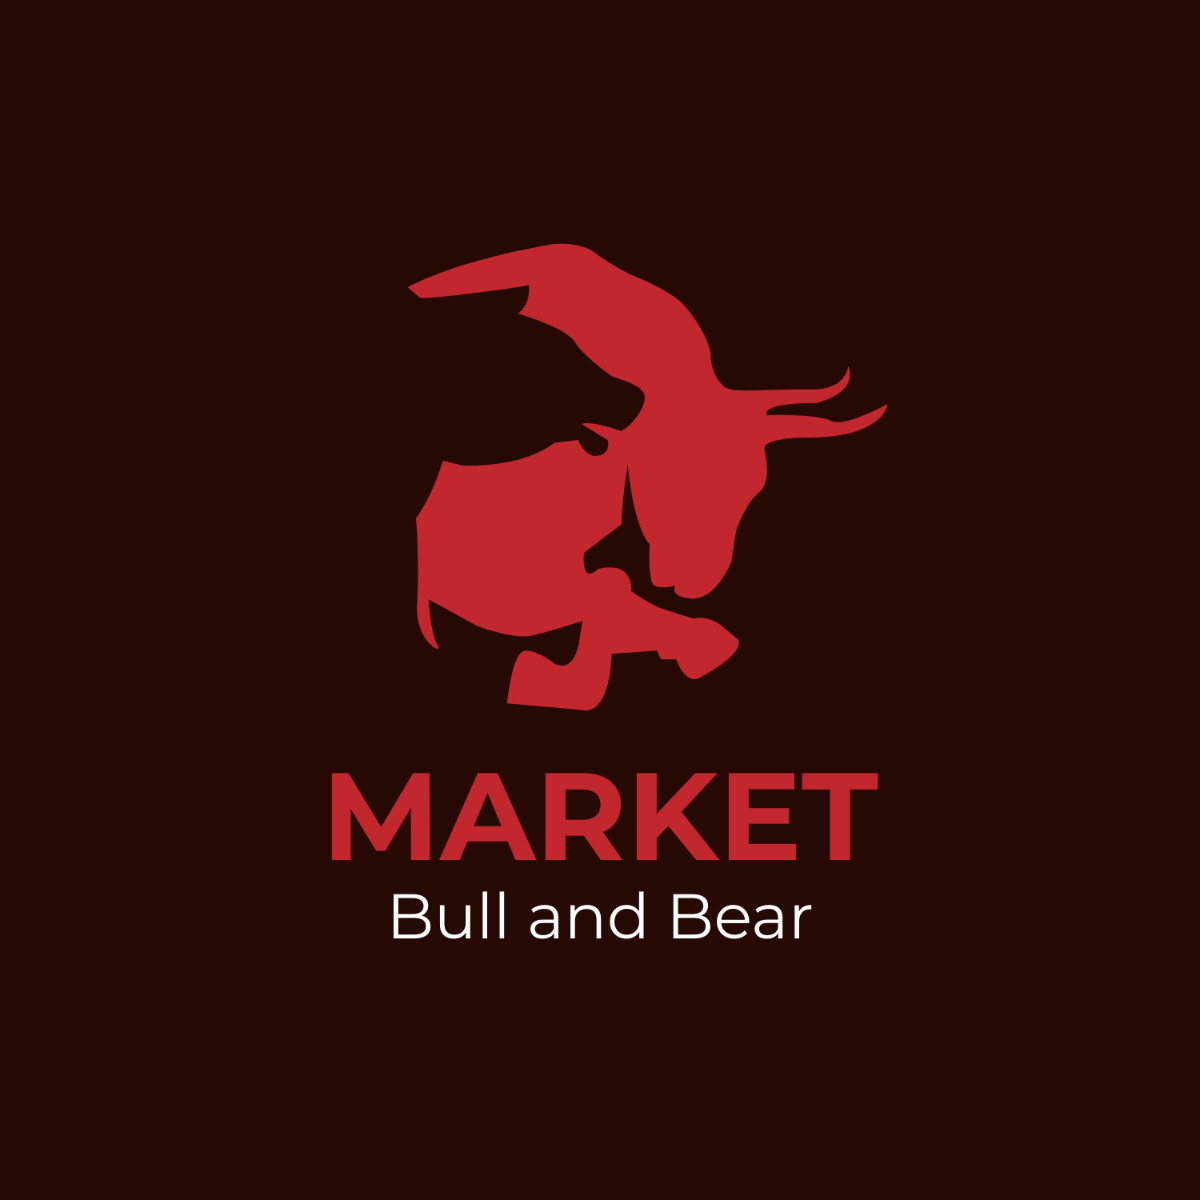 Free Market Bull and Bear Logo Template